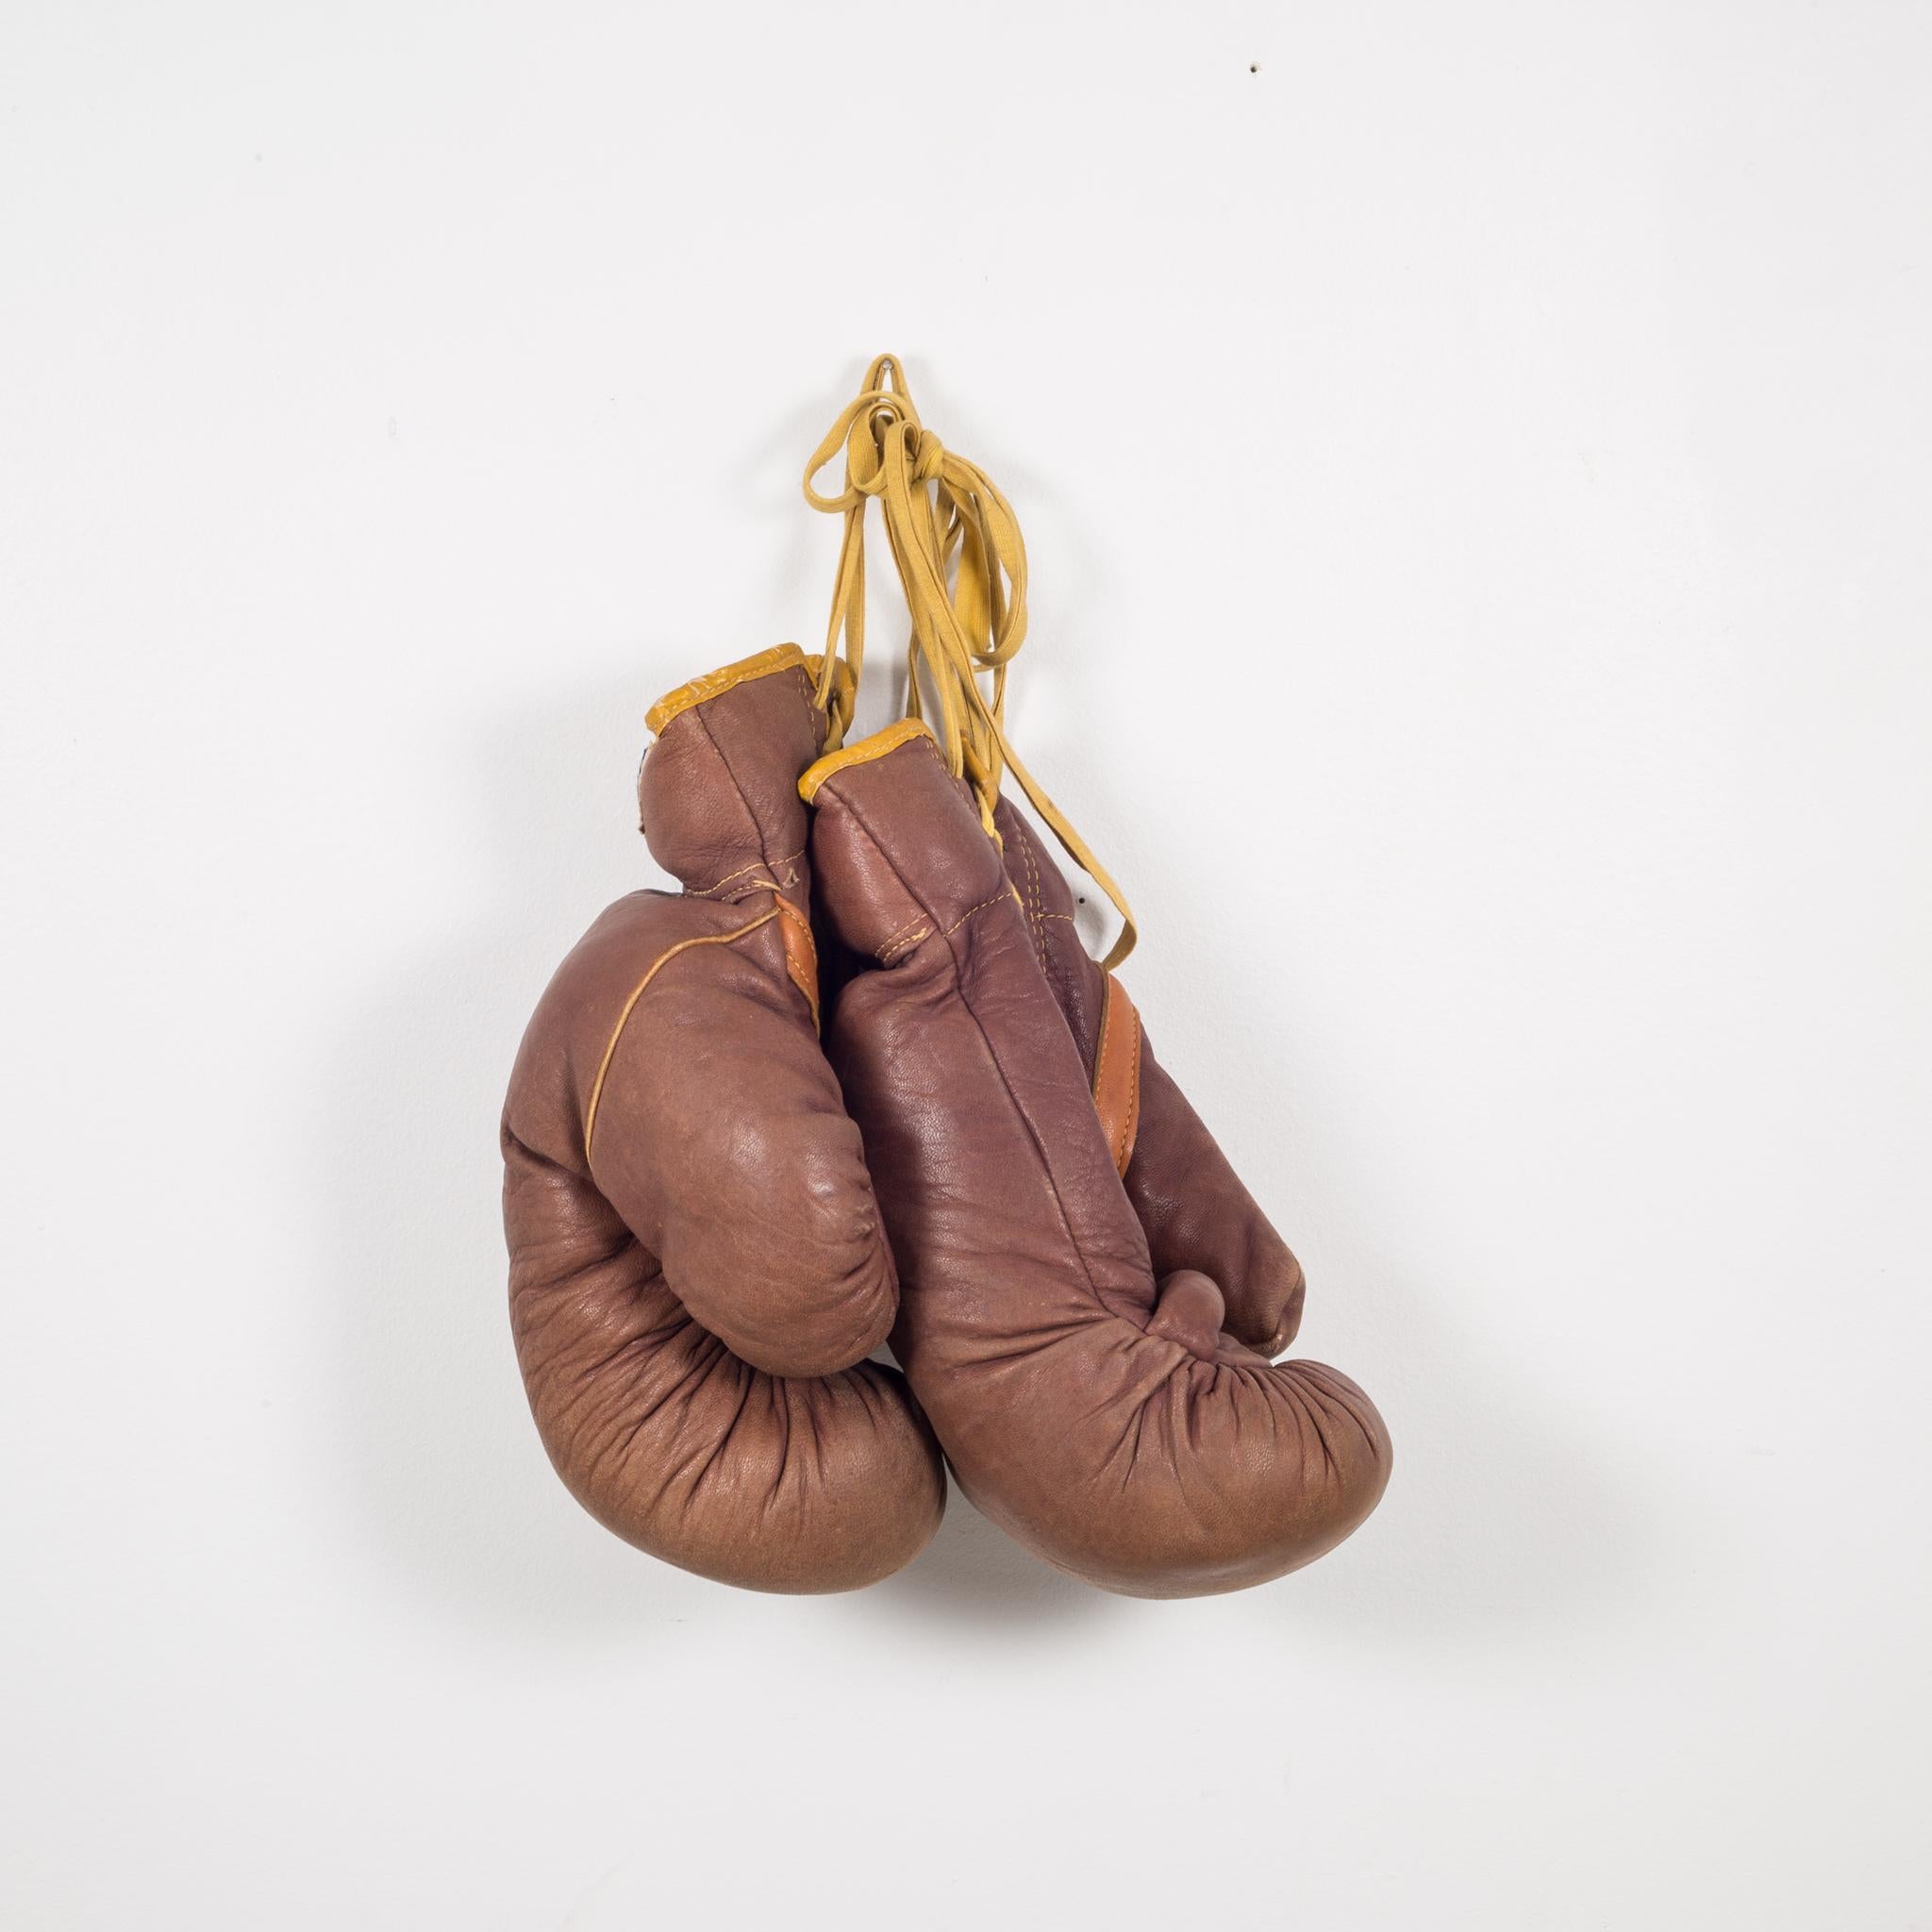 Boxe anglaise Gants de boxe en cuir Toys & Games Sports & Outdoor Recreation Martial Arts & Boxing Boxing Gloves Salle de sport vintage Vintage Pair of brown leather Boxing gloves 1960s England 